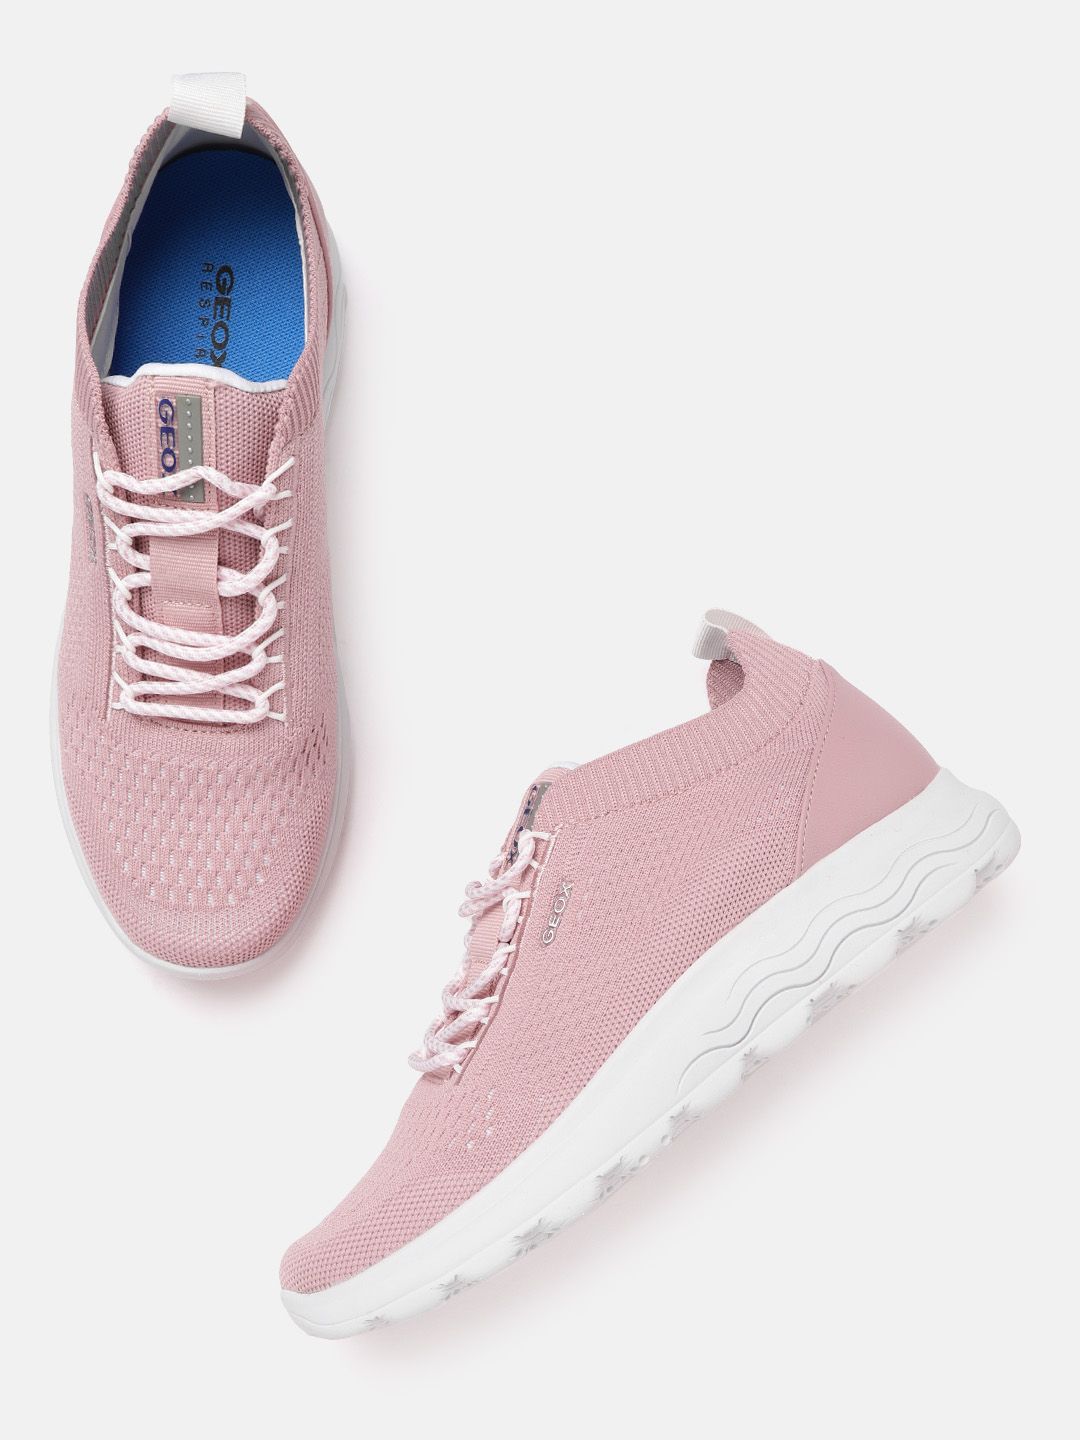 Geox Women Pink Woven Design Sneakers Price in India